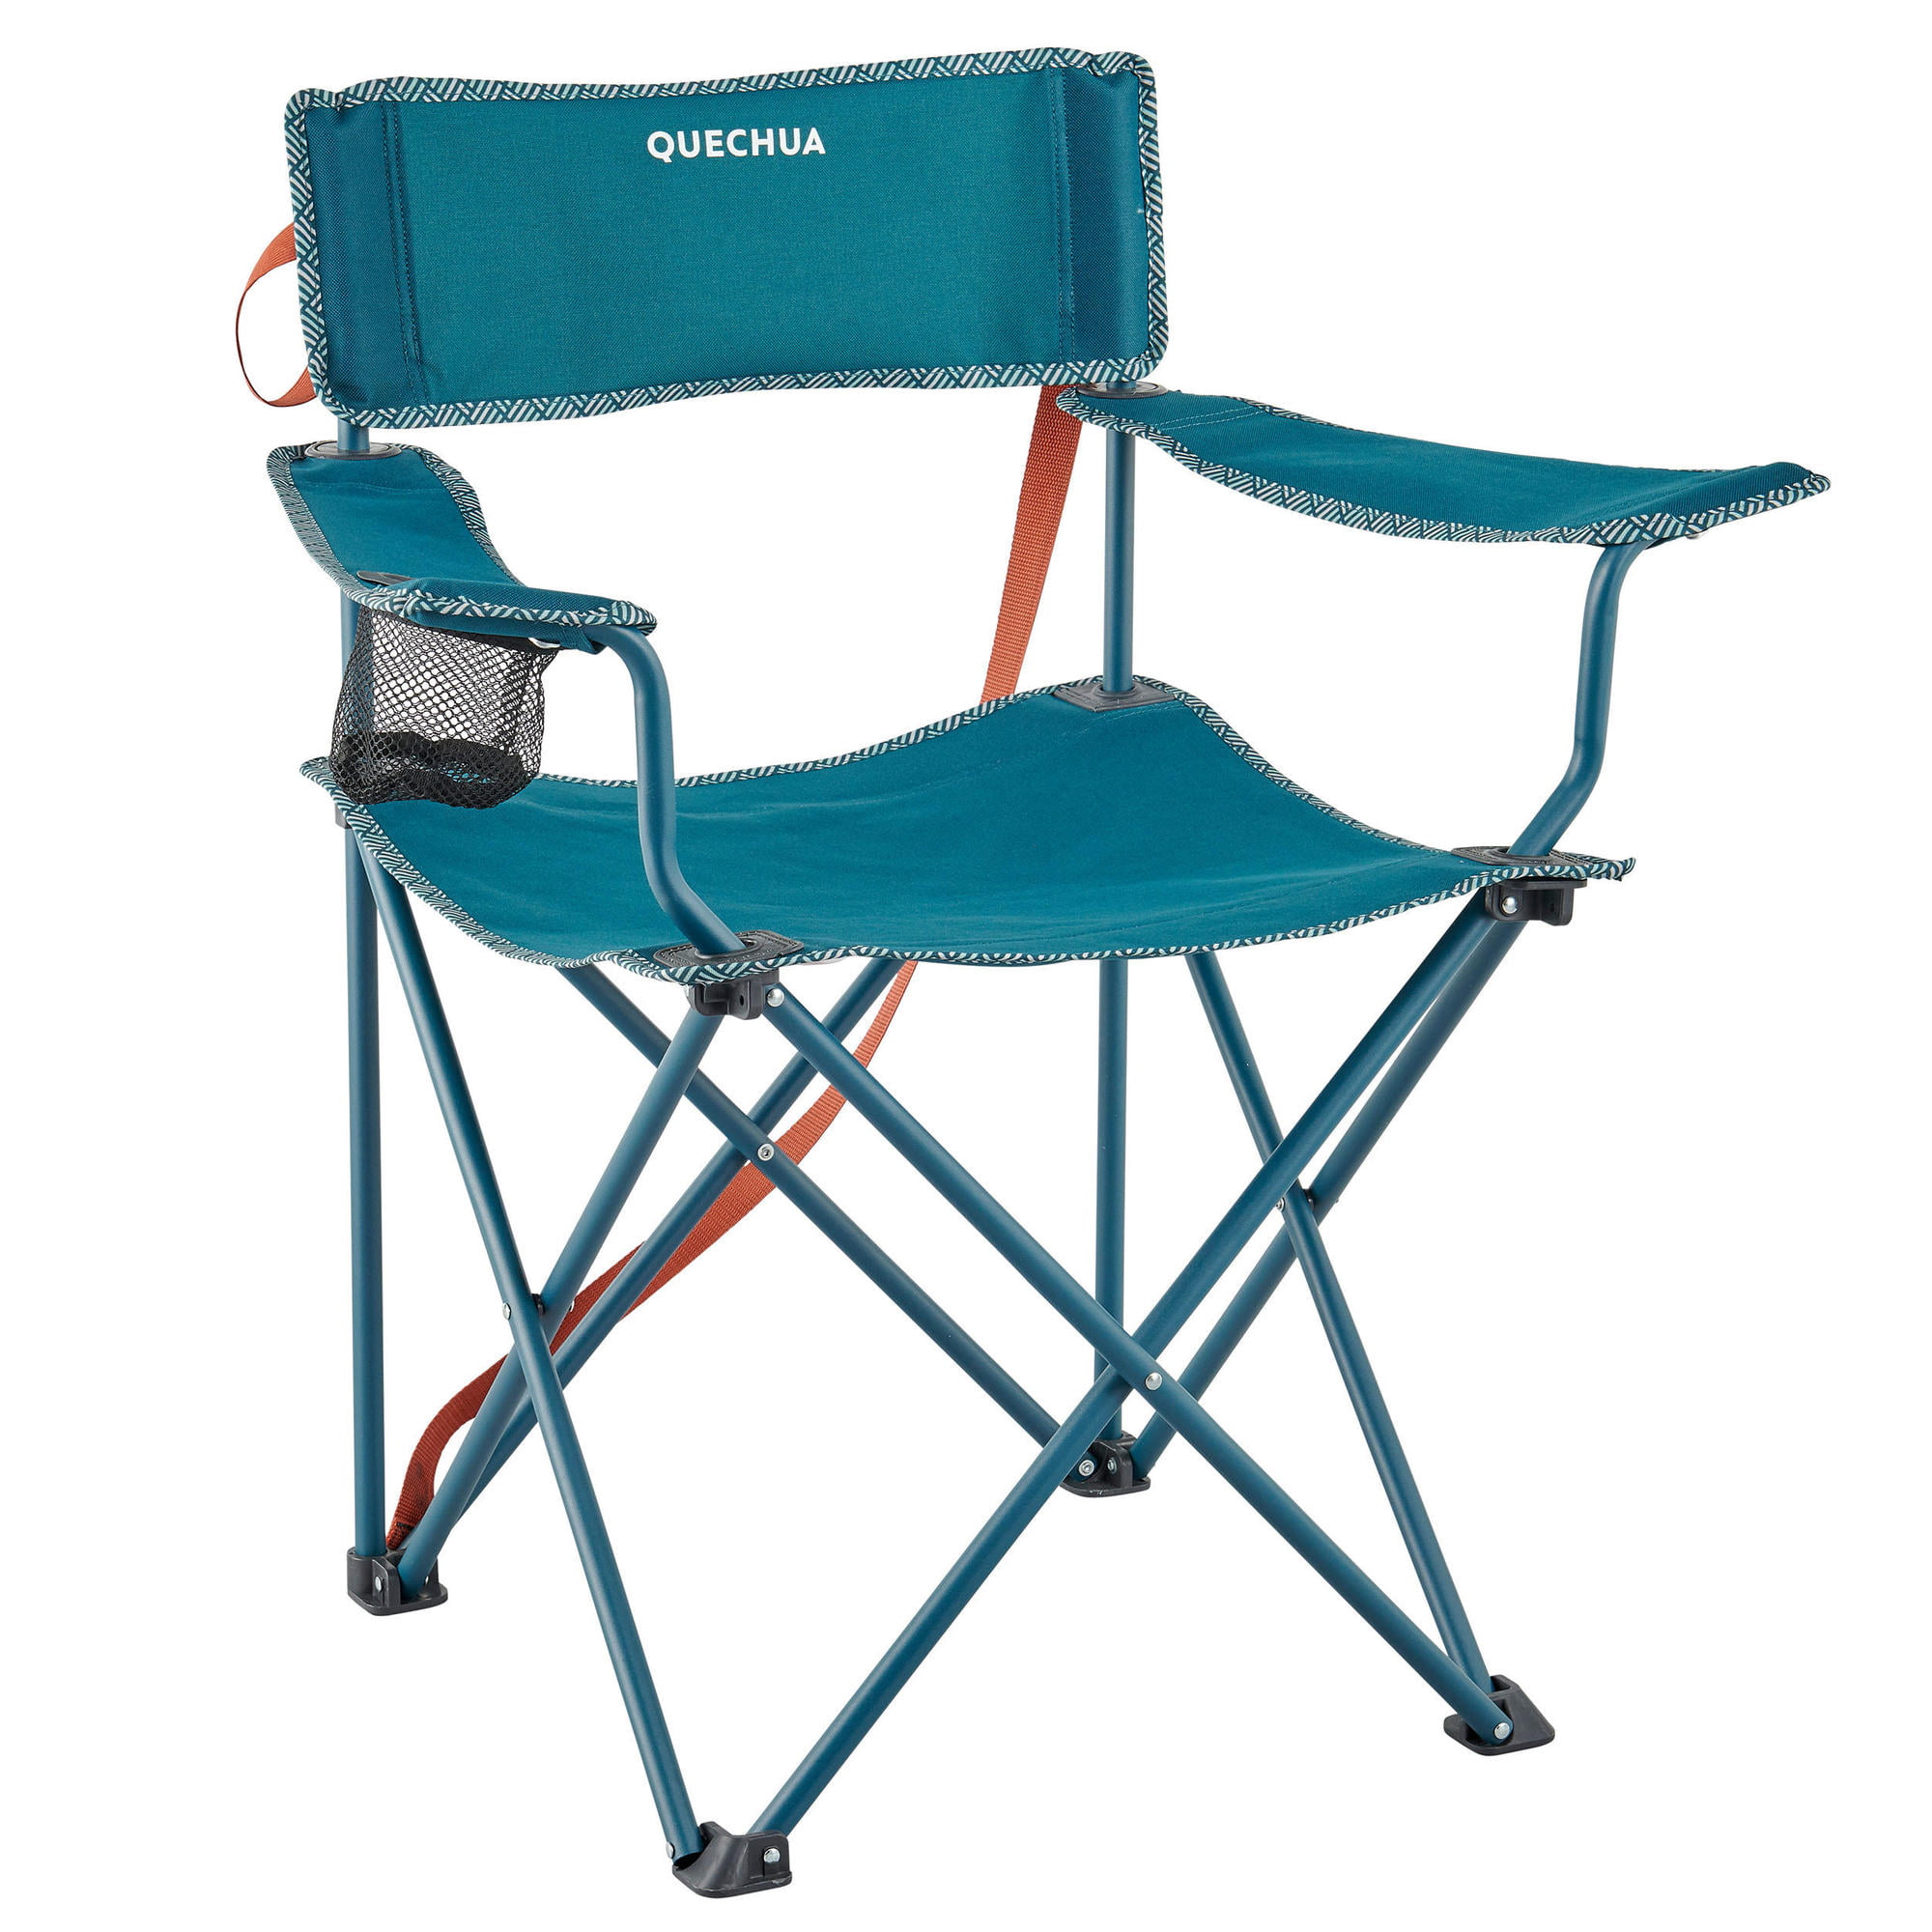 Decathlon Camping Armchair - Basic - Walmart.com